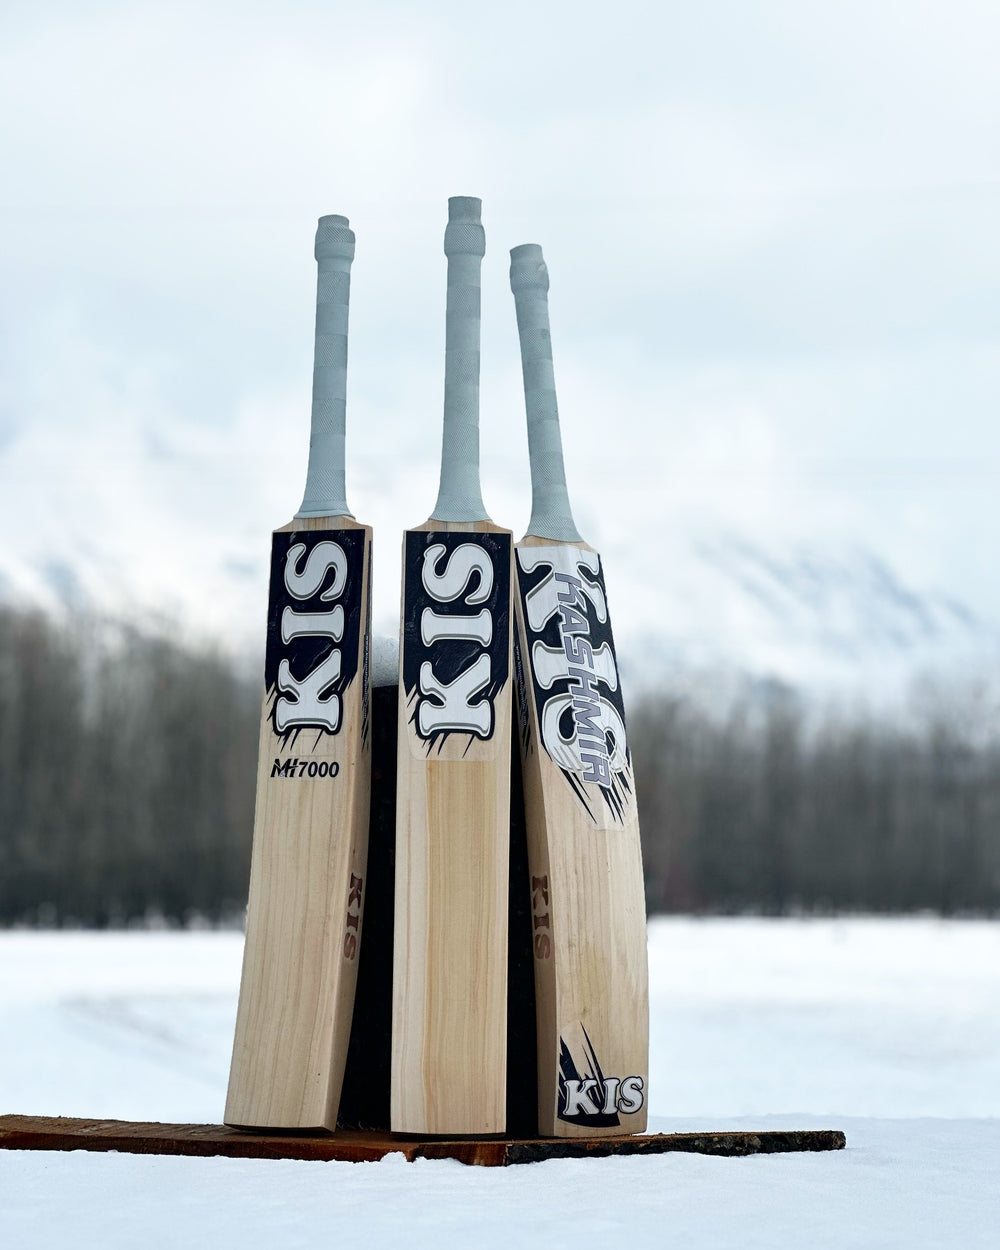 kashmir willow cricket bat in open snow field for photo shoot